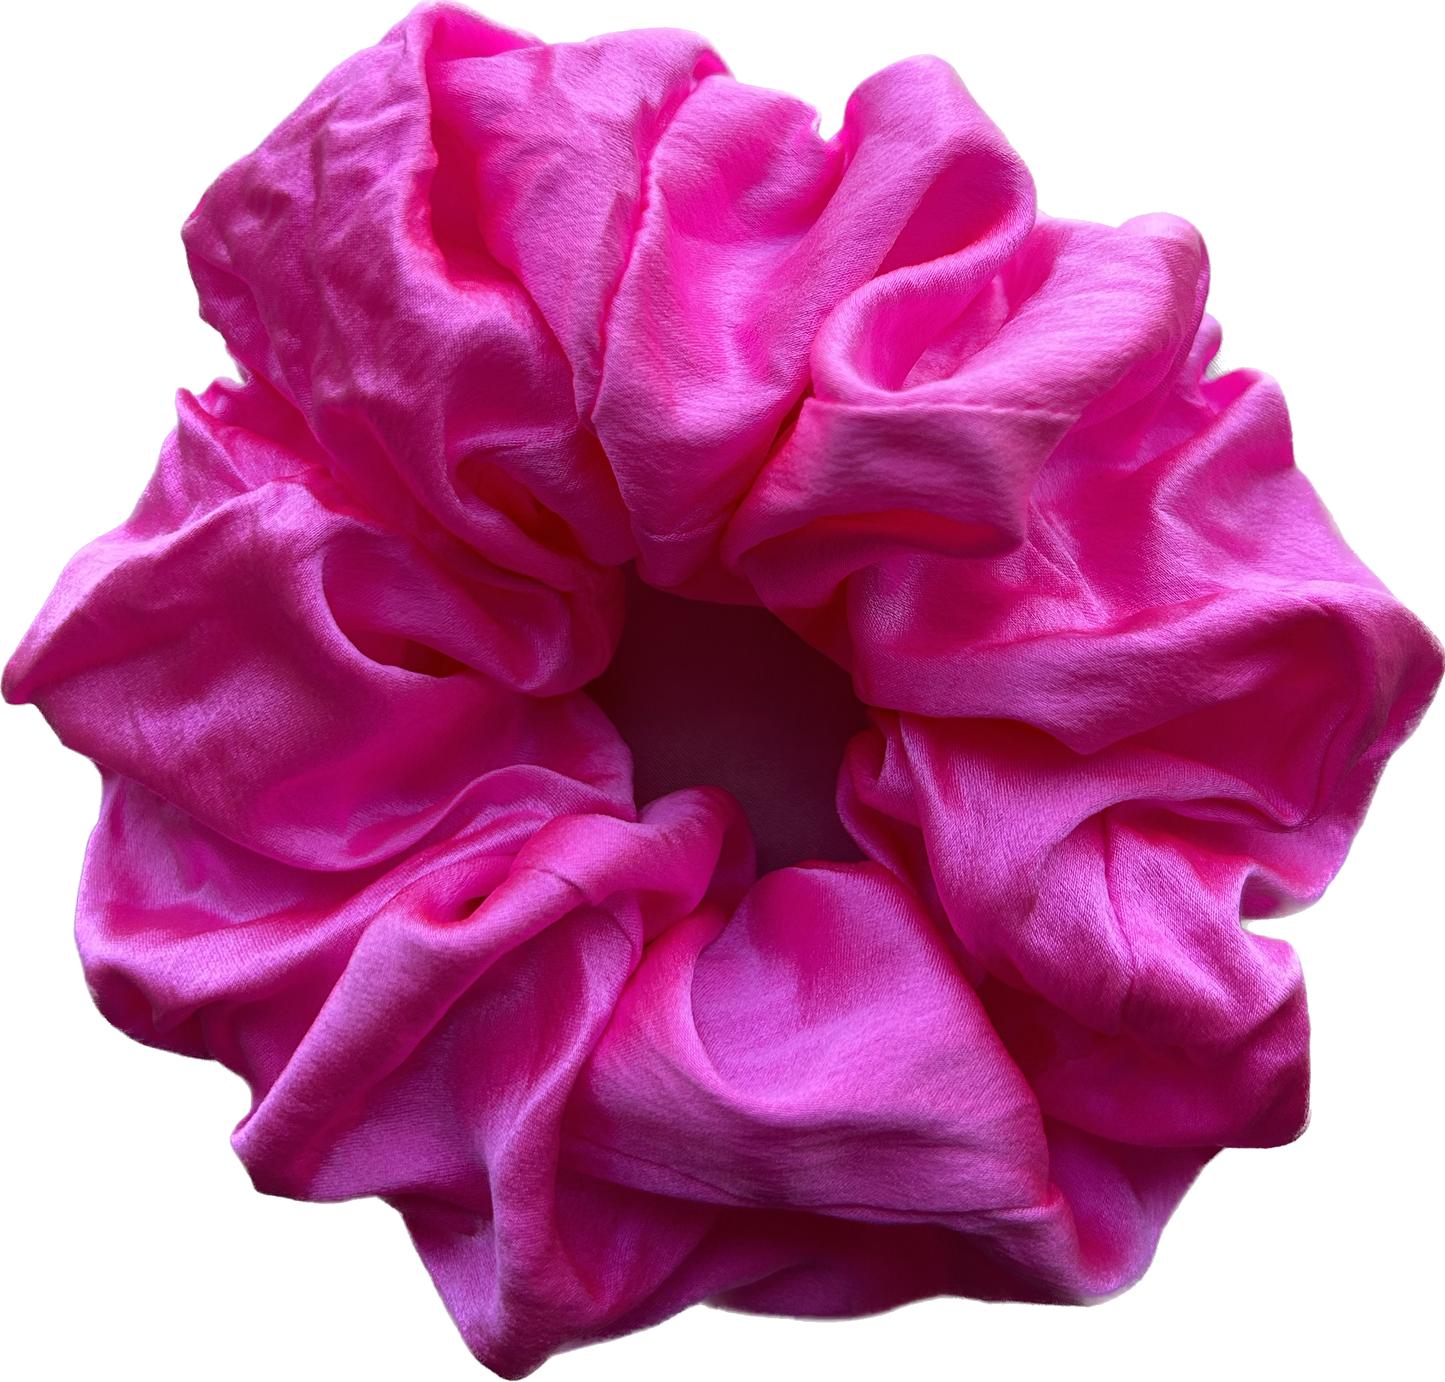 100% Silk Hand-Dyed Scrunchie- "Malibu"